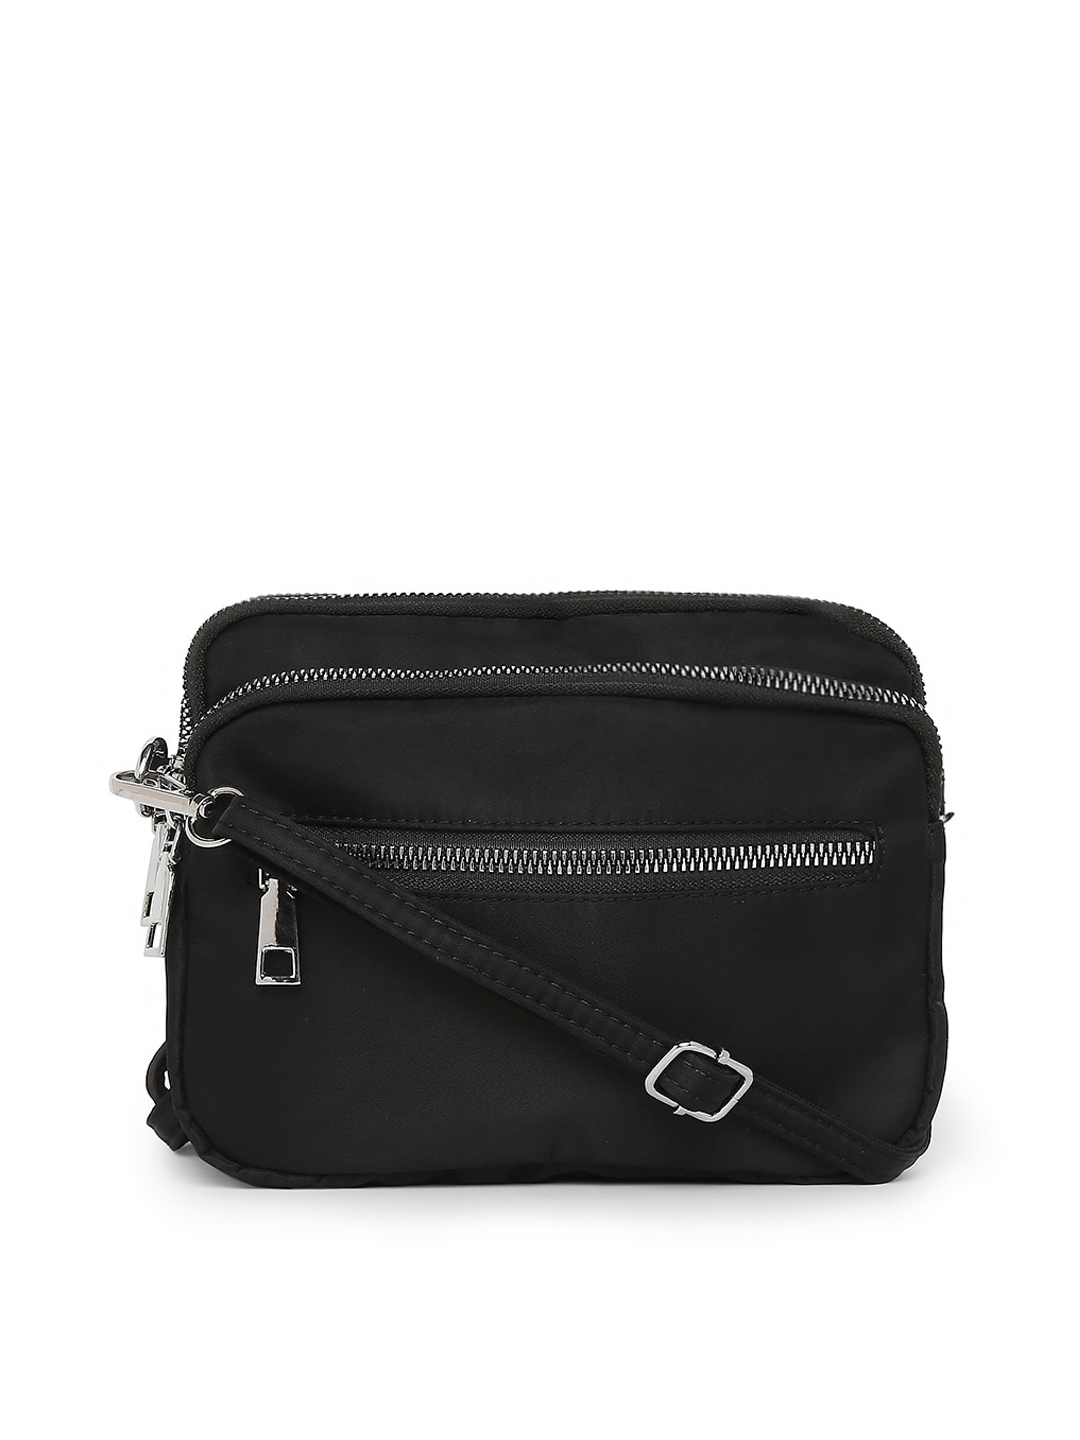 Buy SATCHEL Black Structured Sling Bag - Handbags for Women 18770238 ...